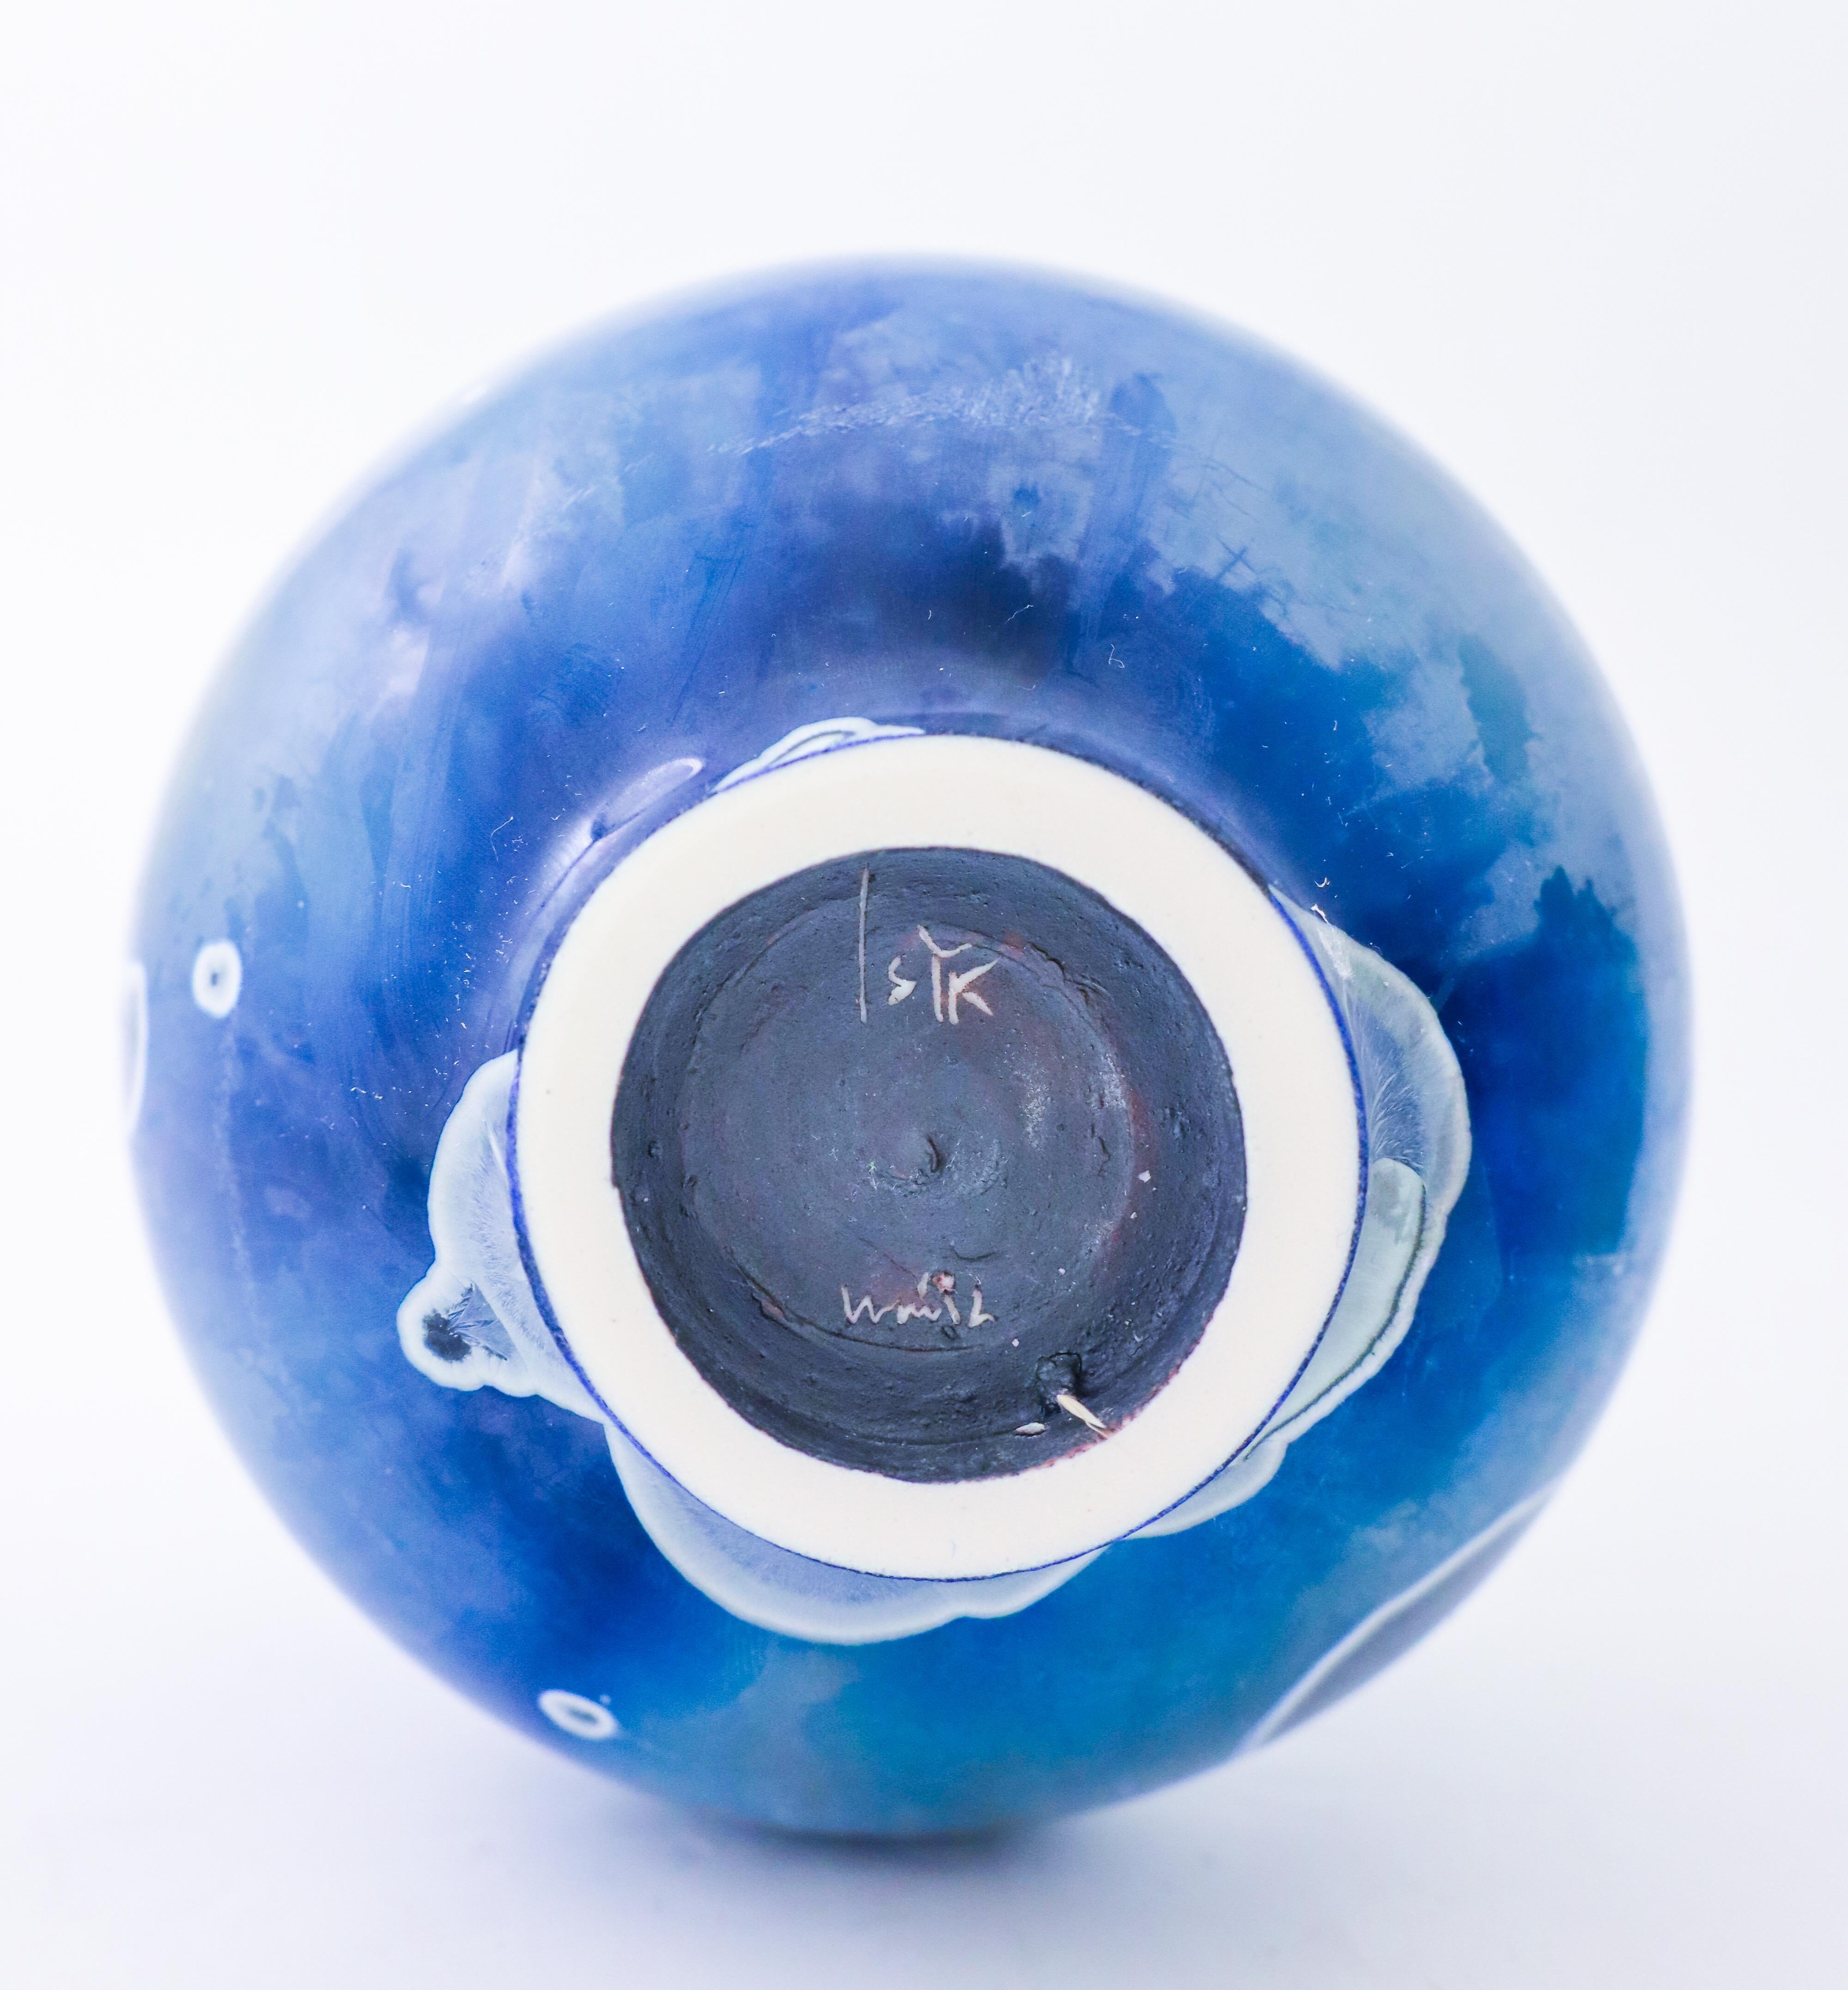 Glazed Isak Isaksson White & Blue Ceramic Vase Crystalline Glaze Contemporary Artist For Sale